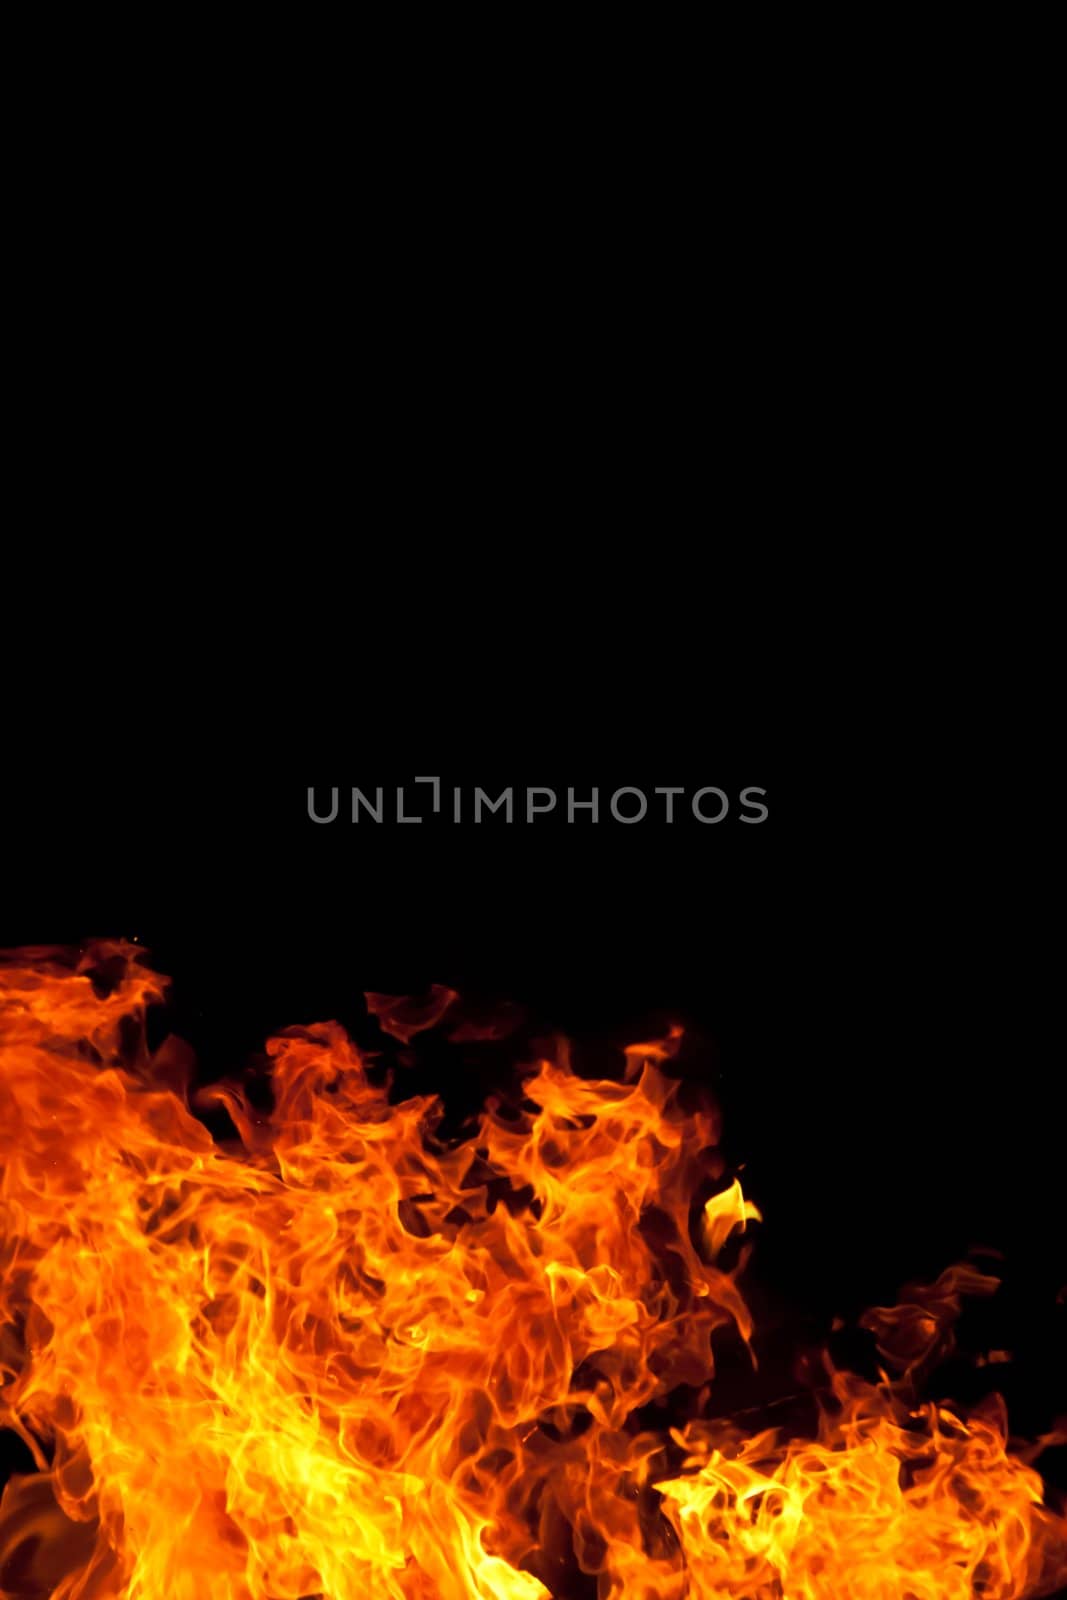 a fire against a black backgound